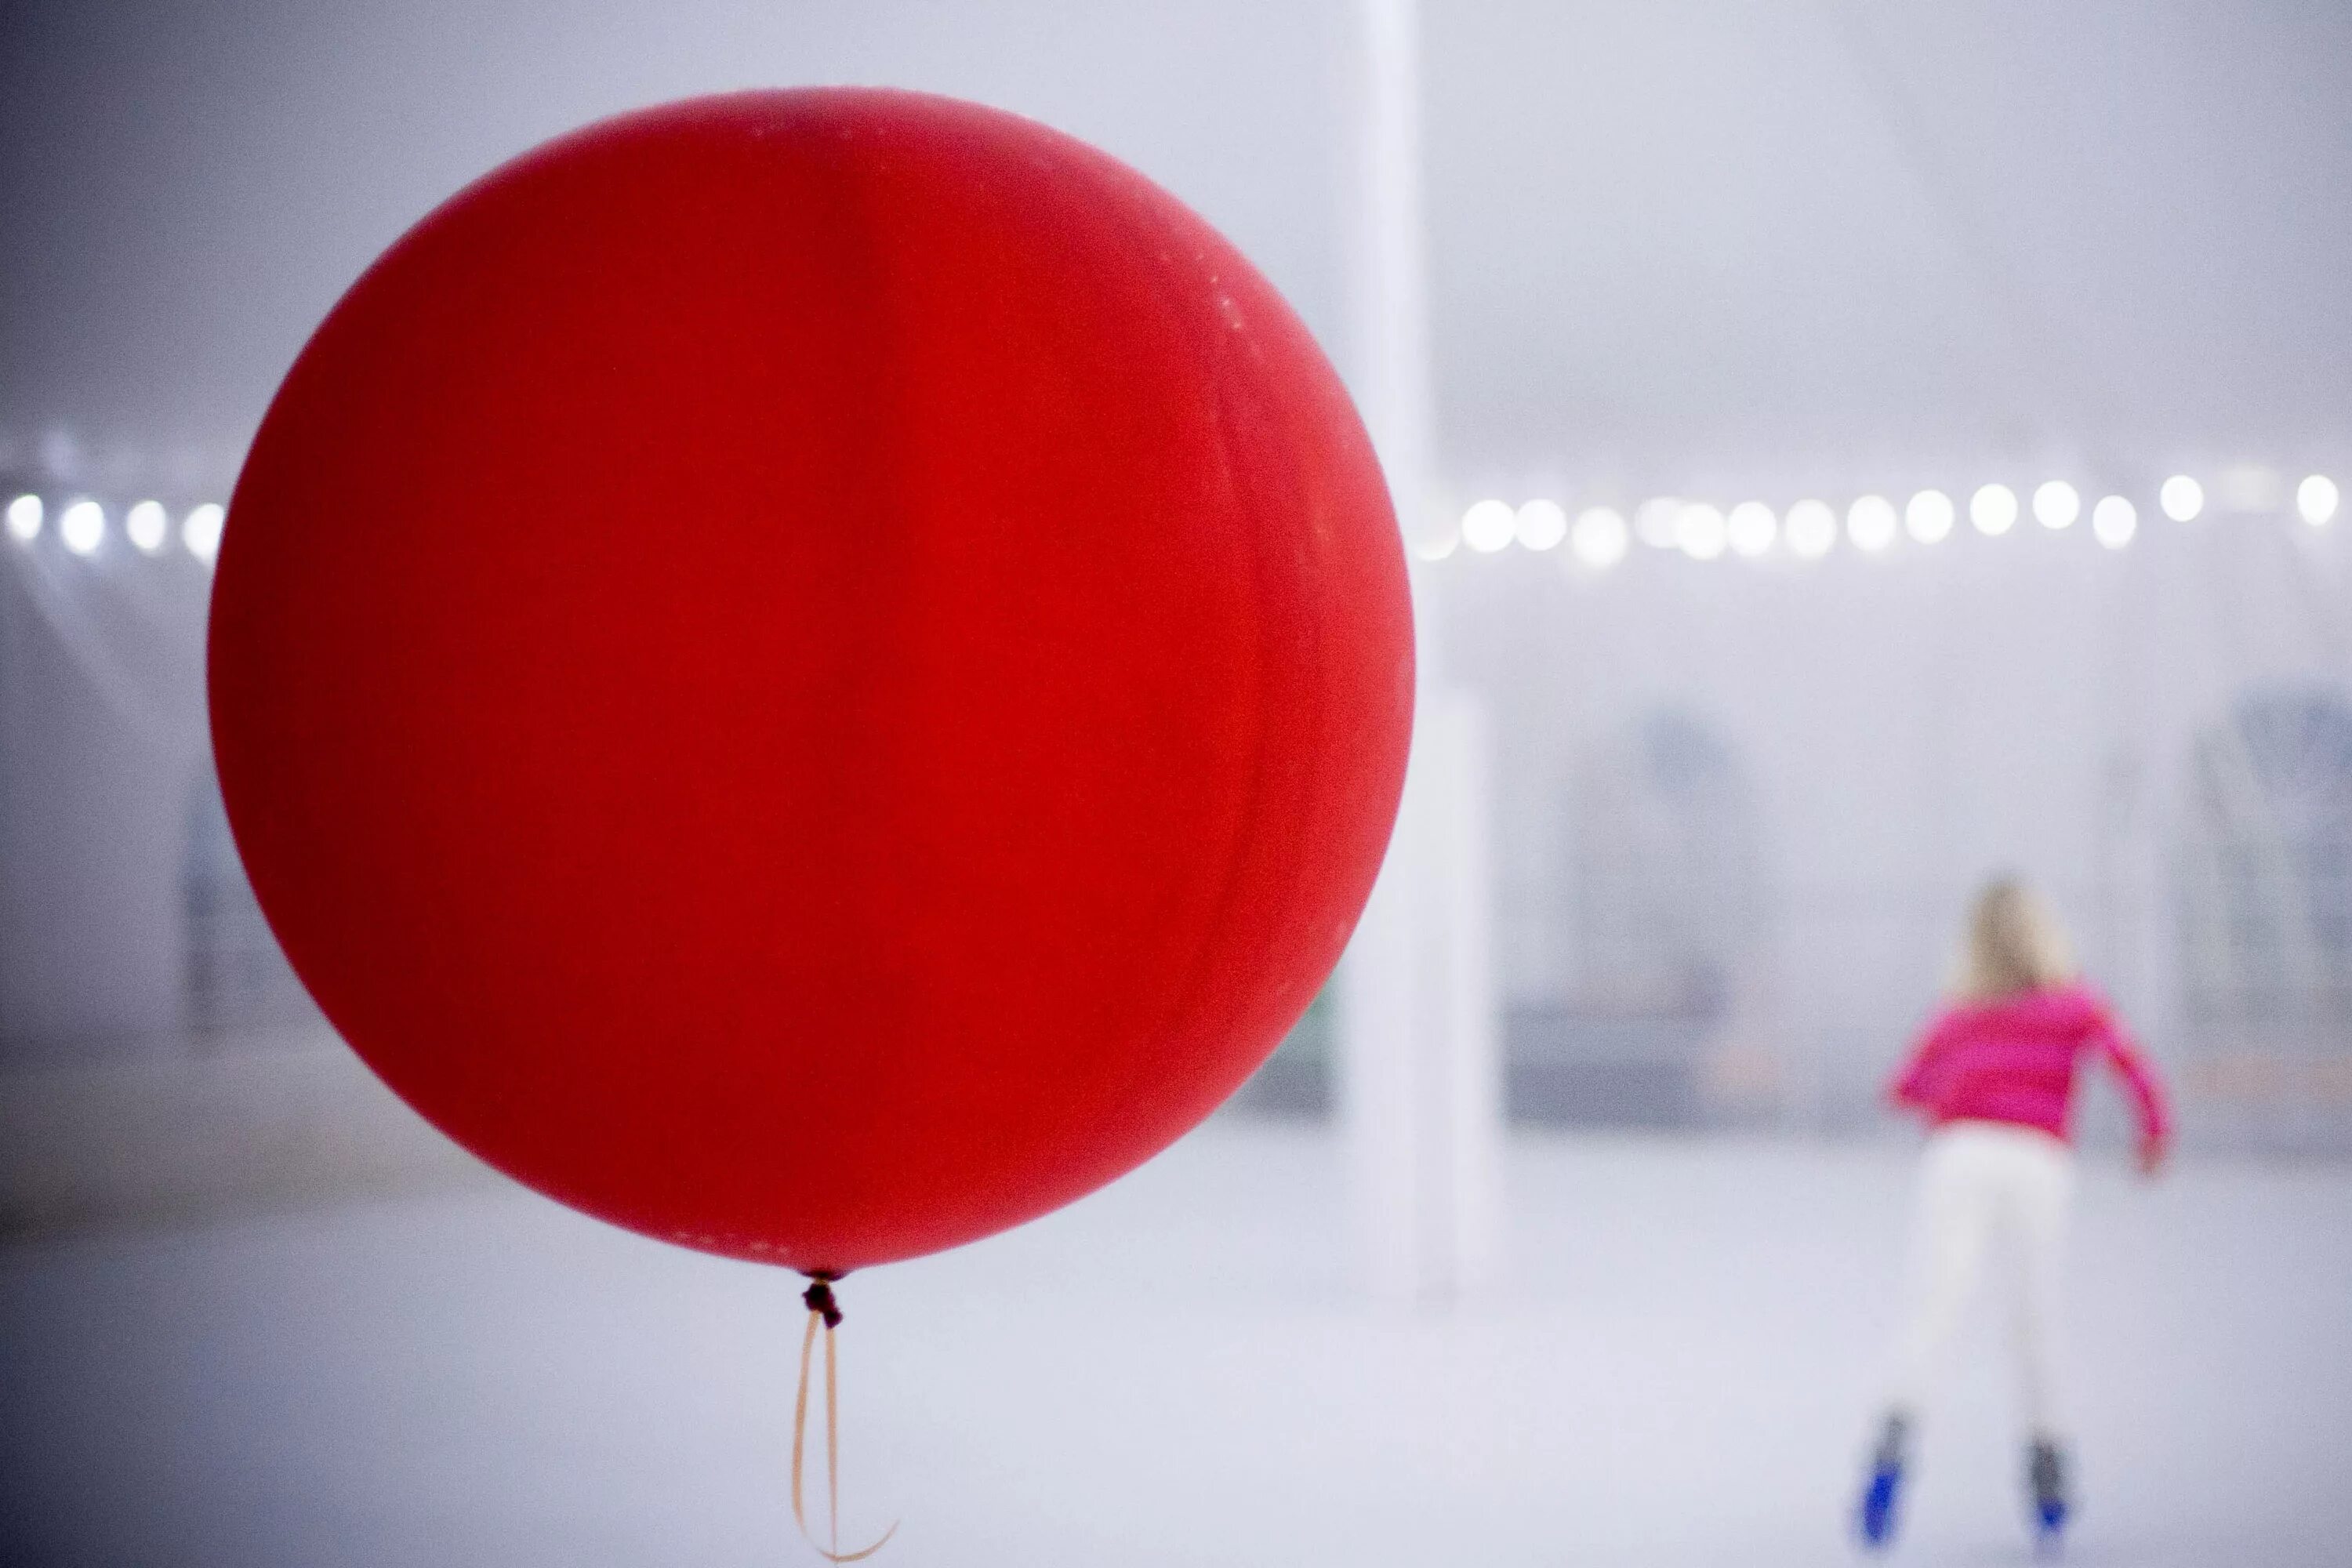 Шаре икс. Воздушный шарик. Красный воздушный шар. Красный большой воздушный шар. Красный круглый шар.